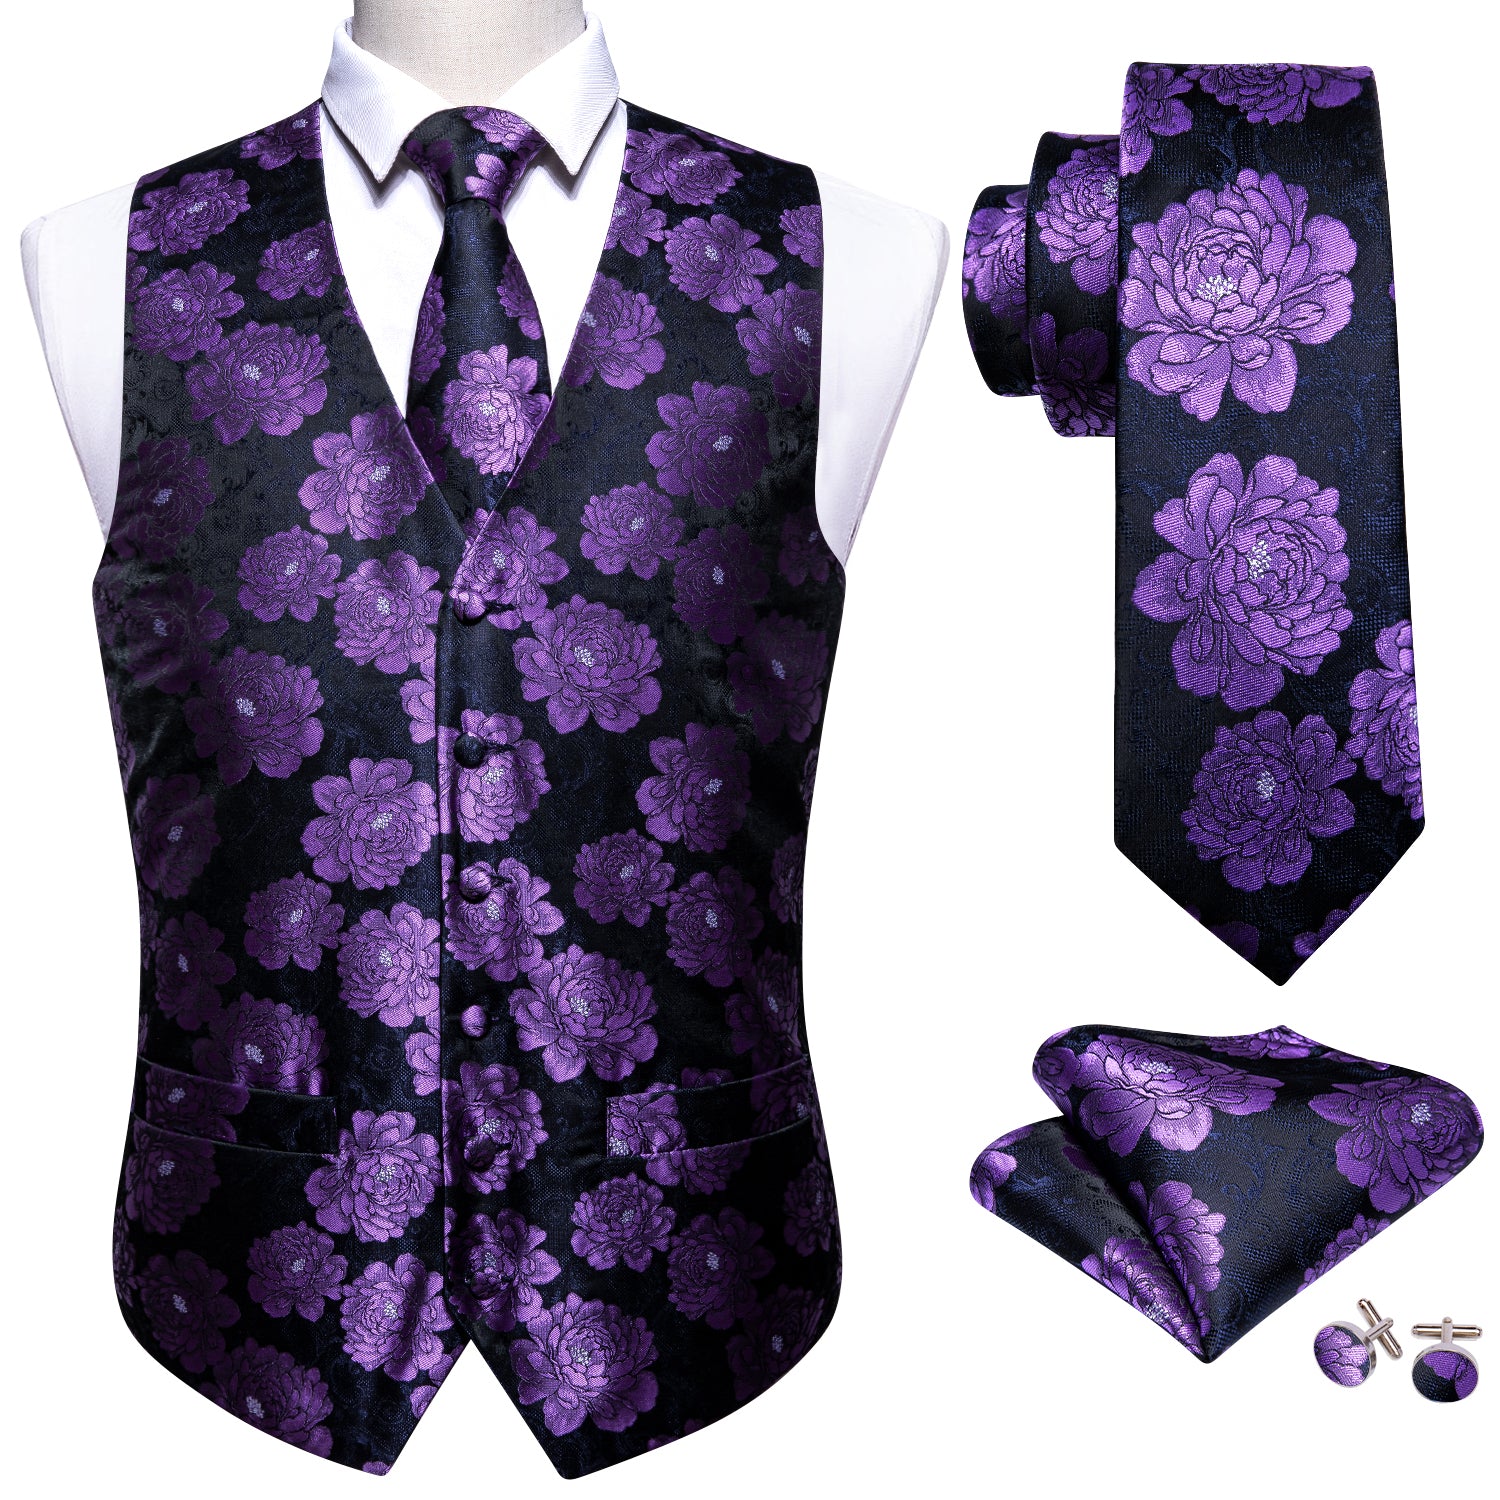 Barry Wang Classy Men's Purple Flower Silk No Collar Vest Necktie Set